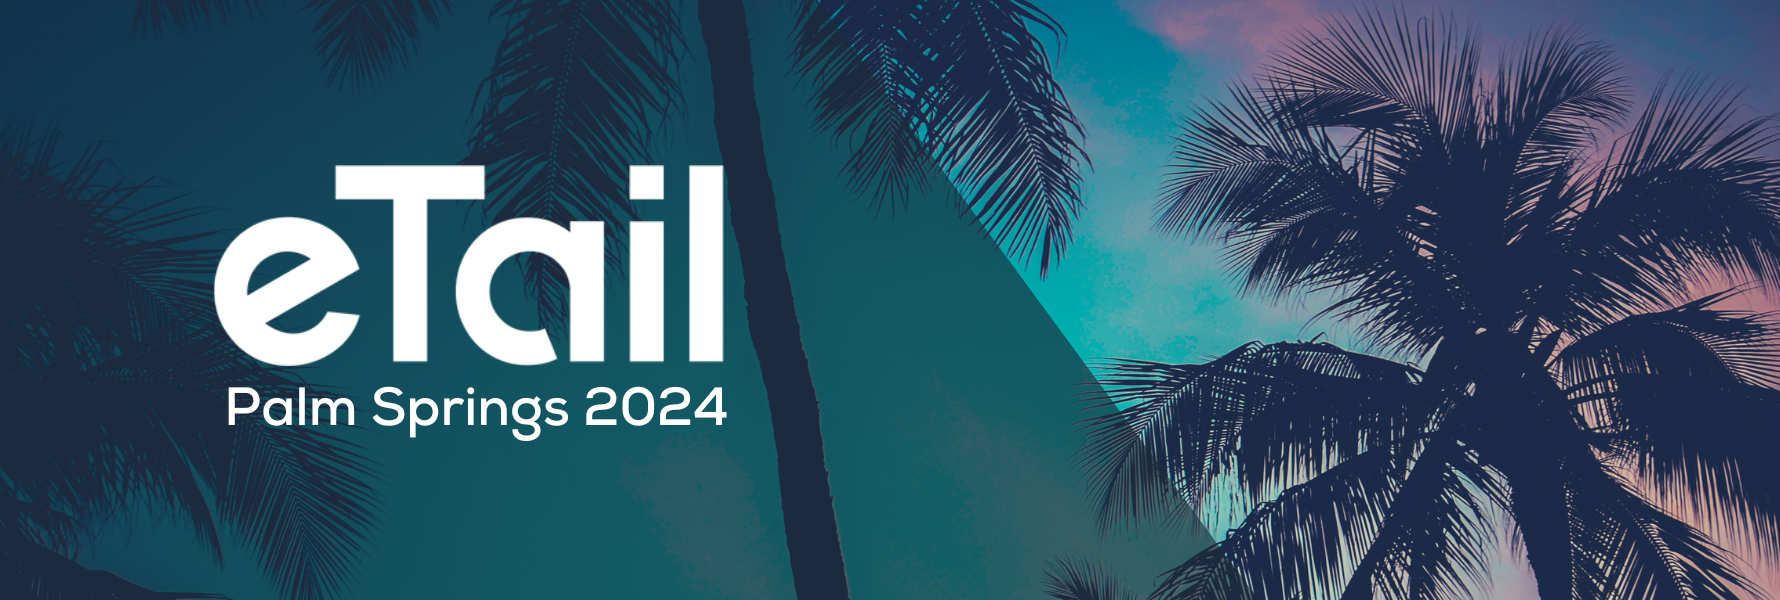 Takeaways from eTail Palm Springs 2024